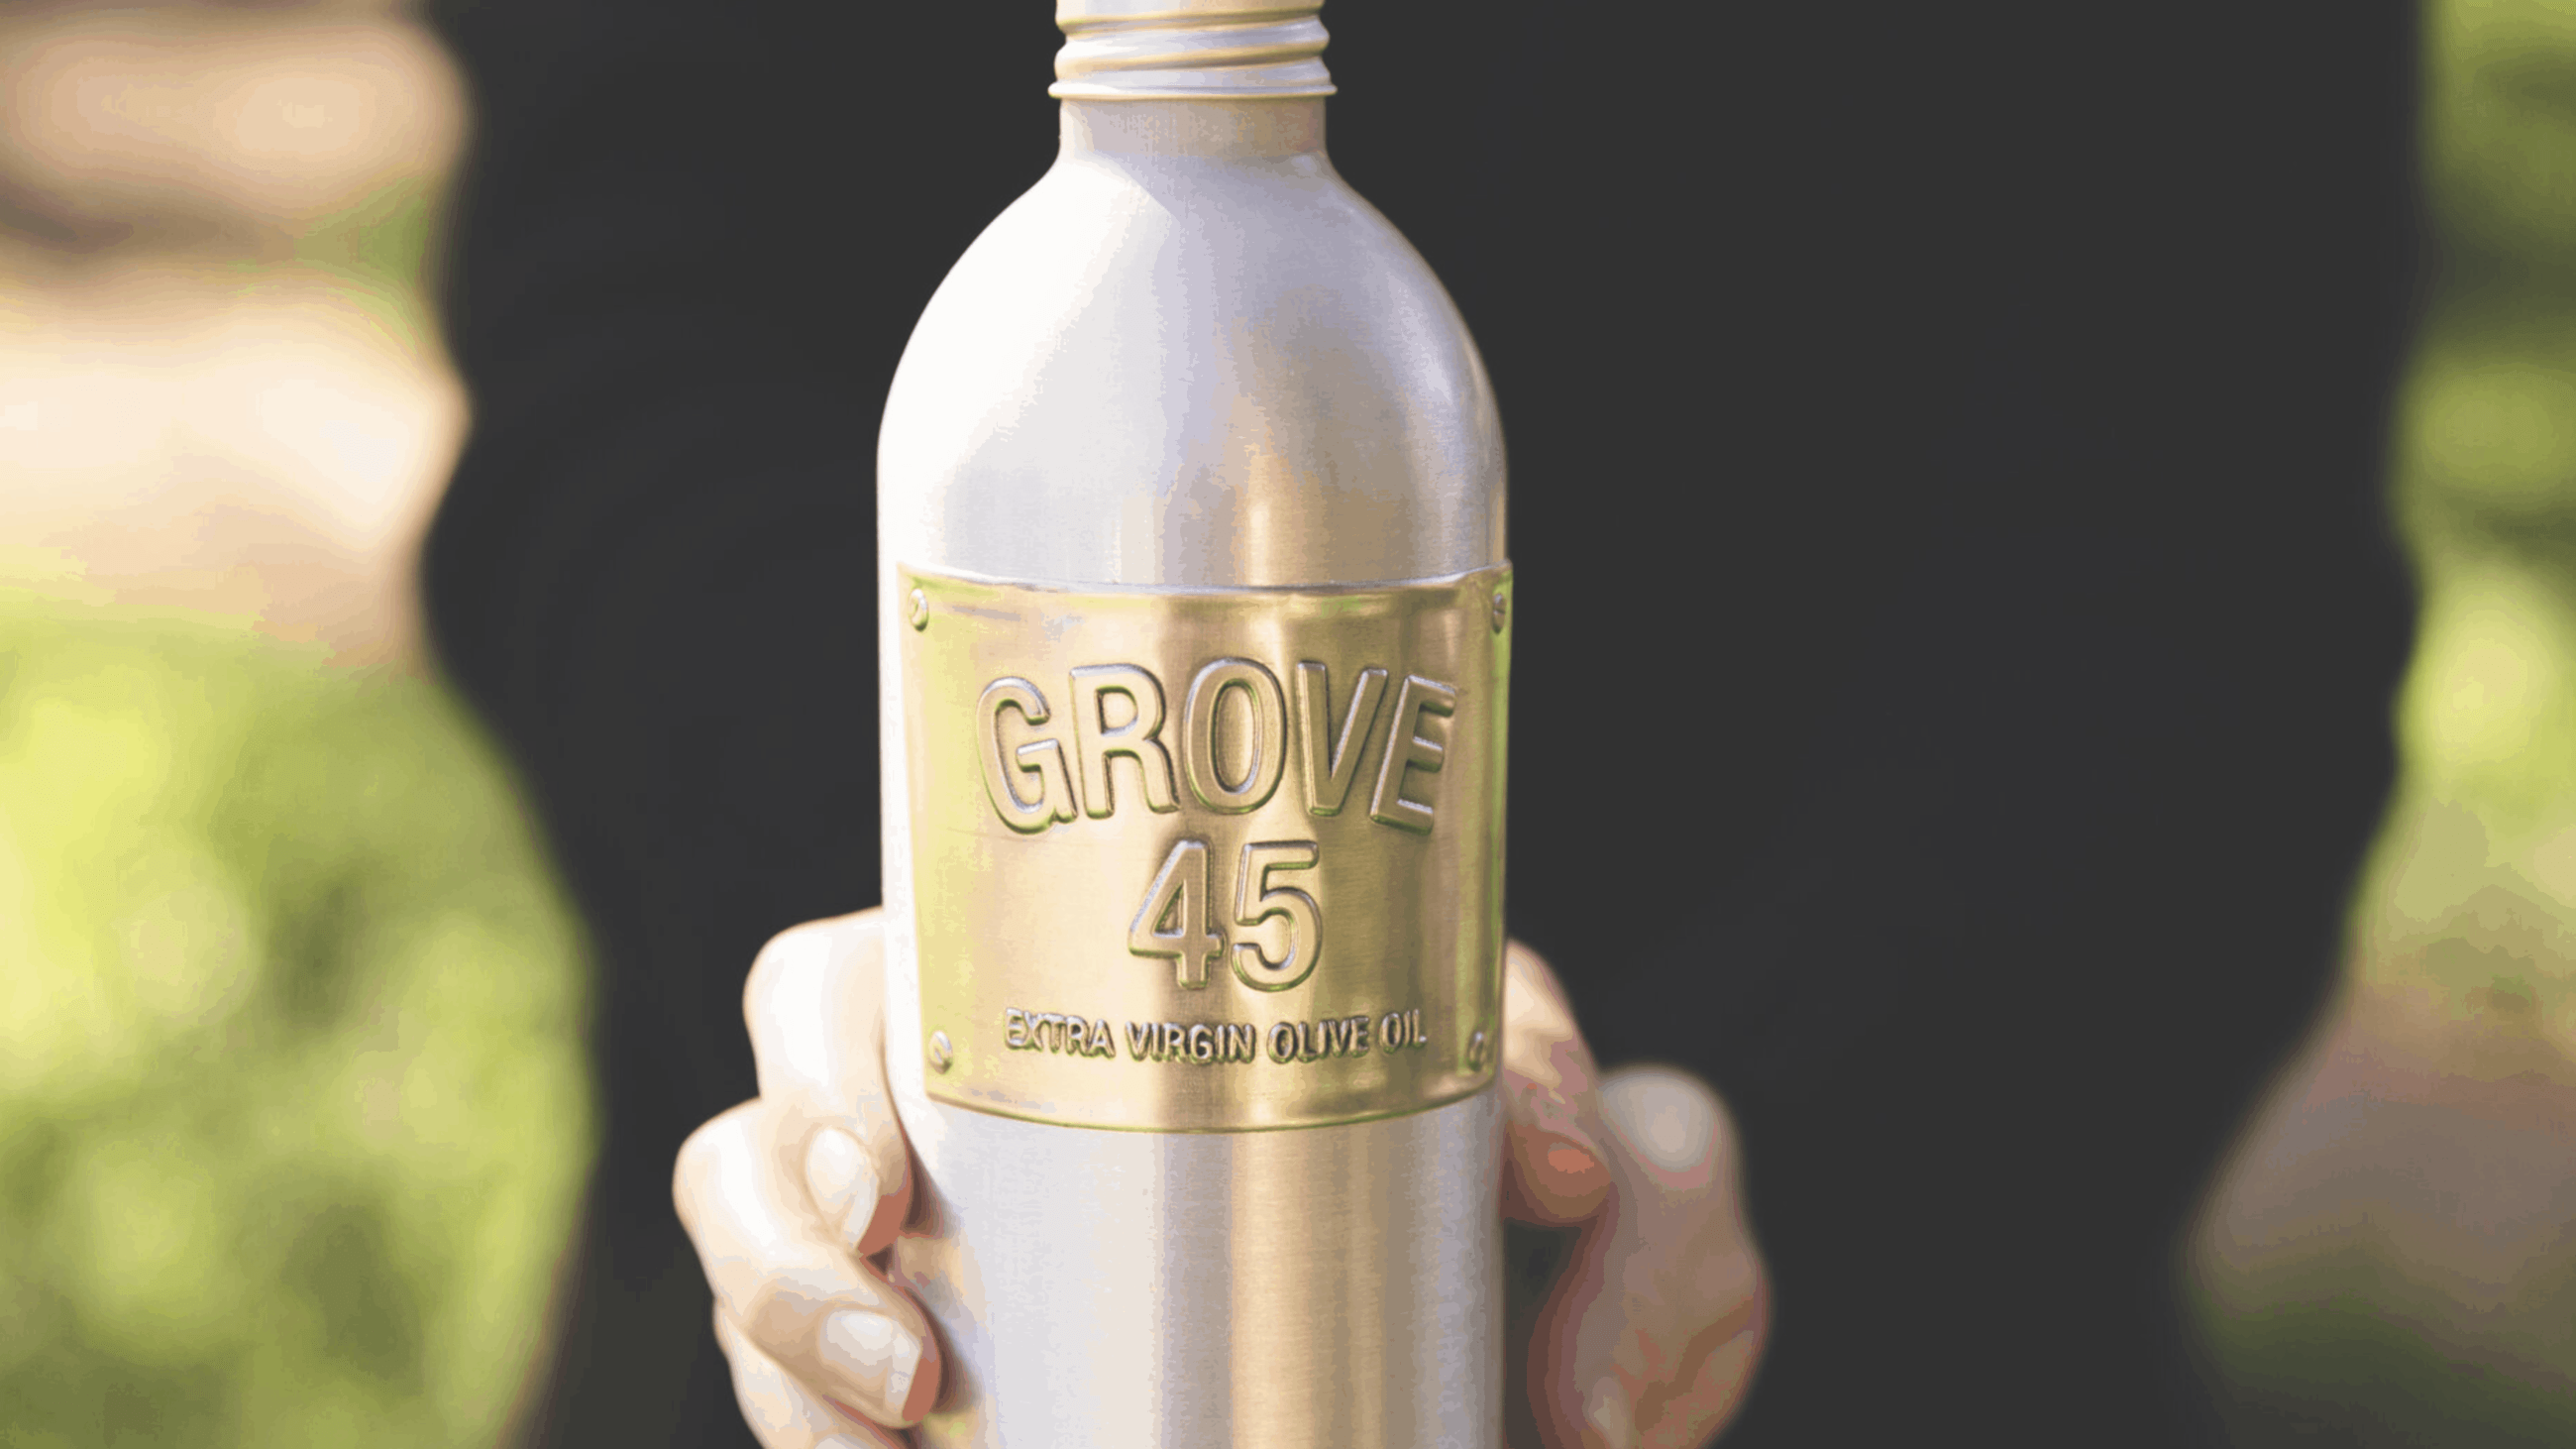 Grove 45 Extra Virgin Olive Oil